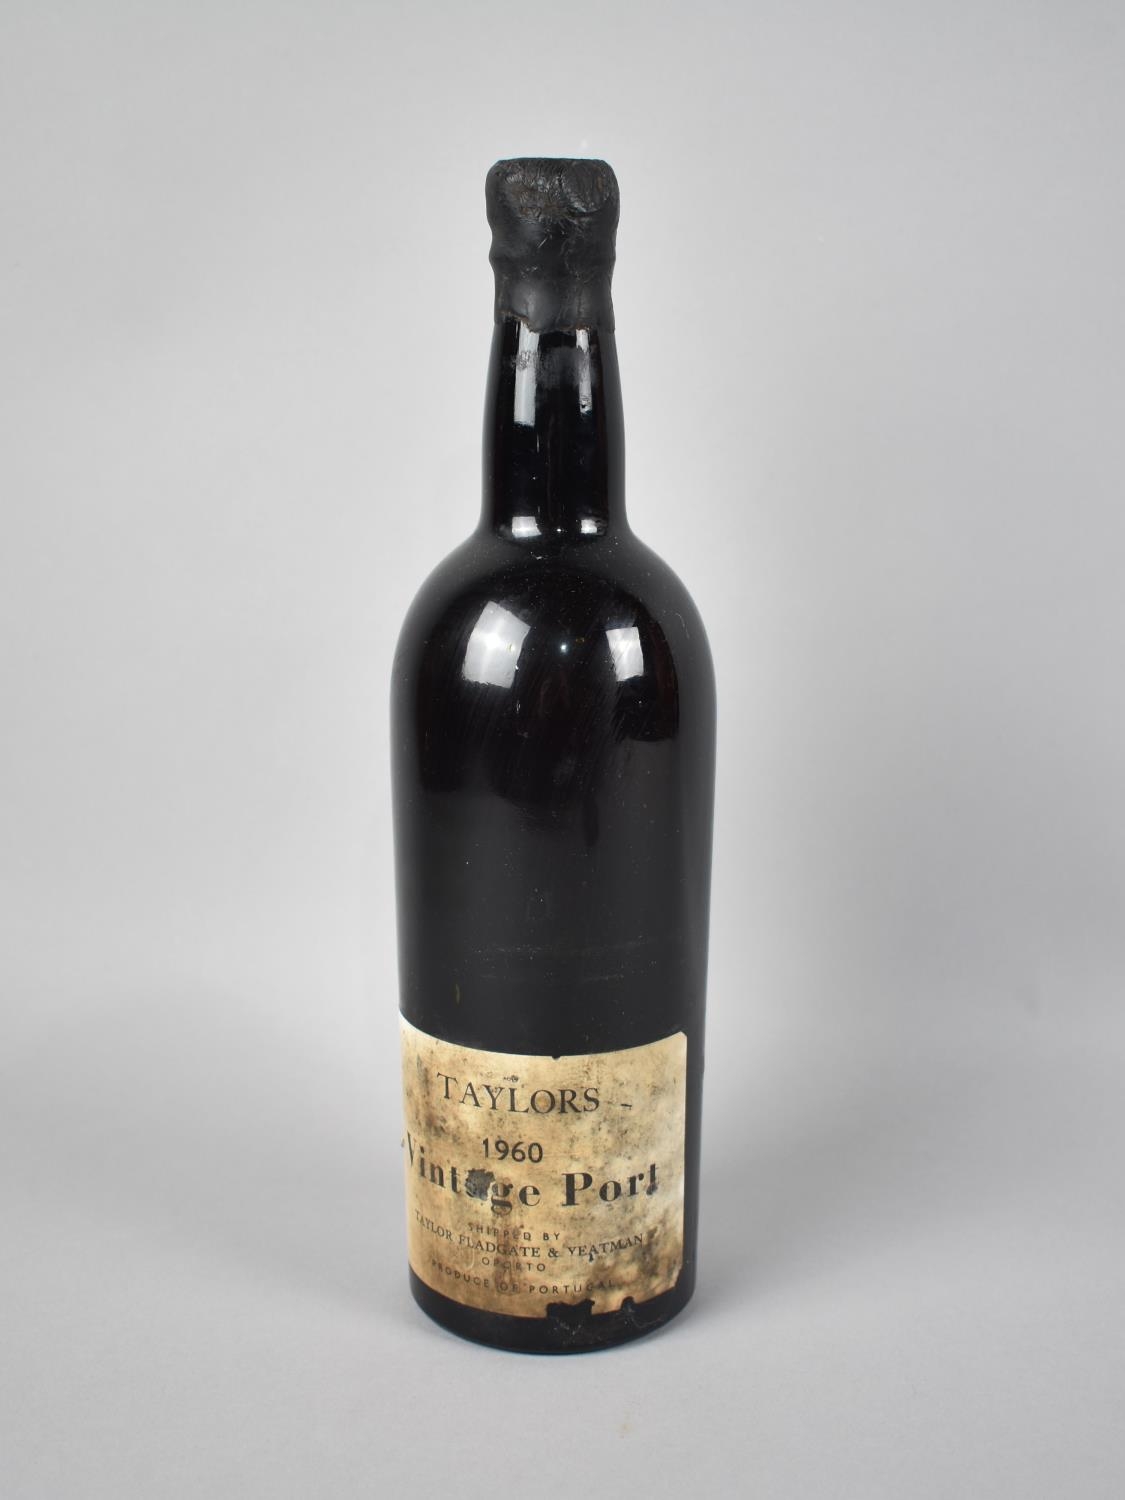 A Single Bottle of Taylors 1960 Vintage Port